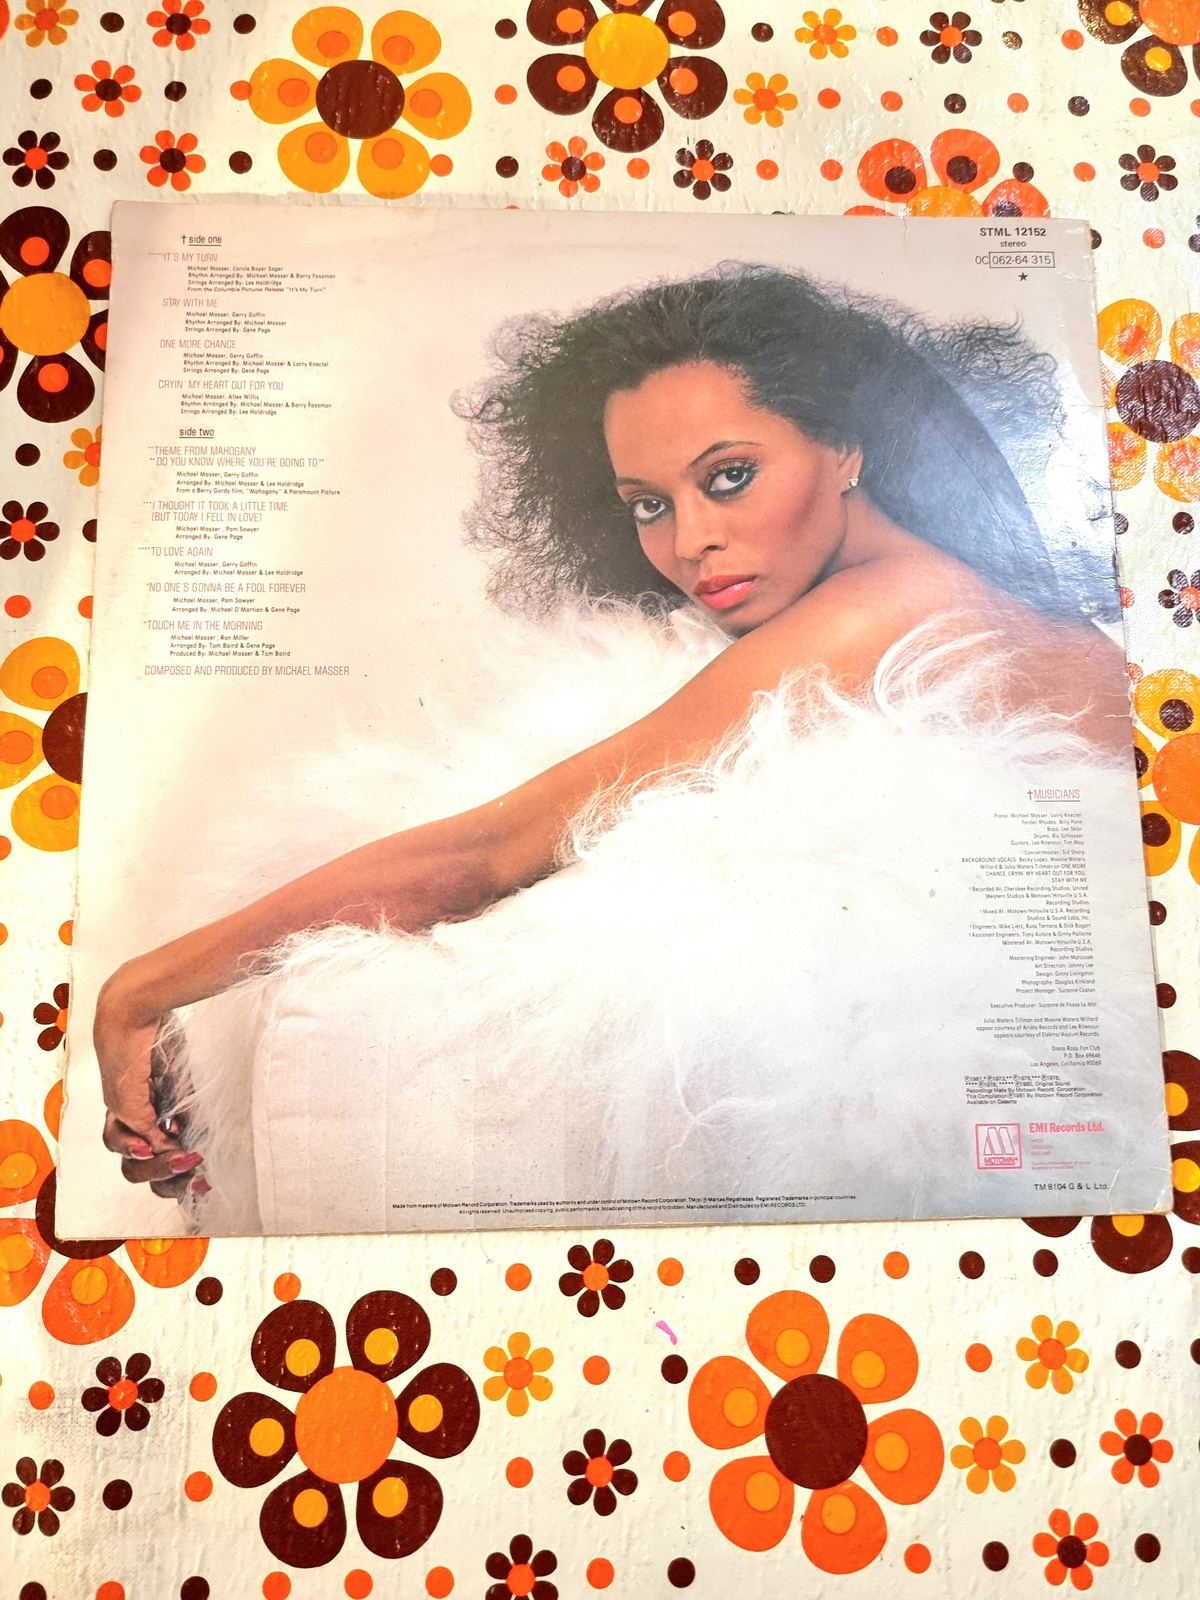 Diana Ross – To Love Again Vinyl Record